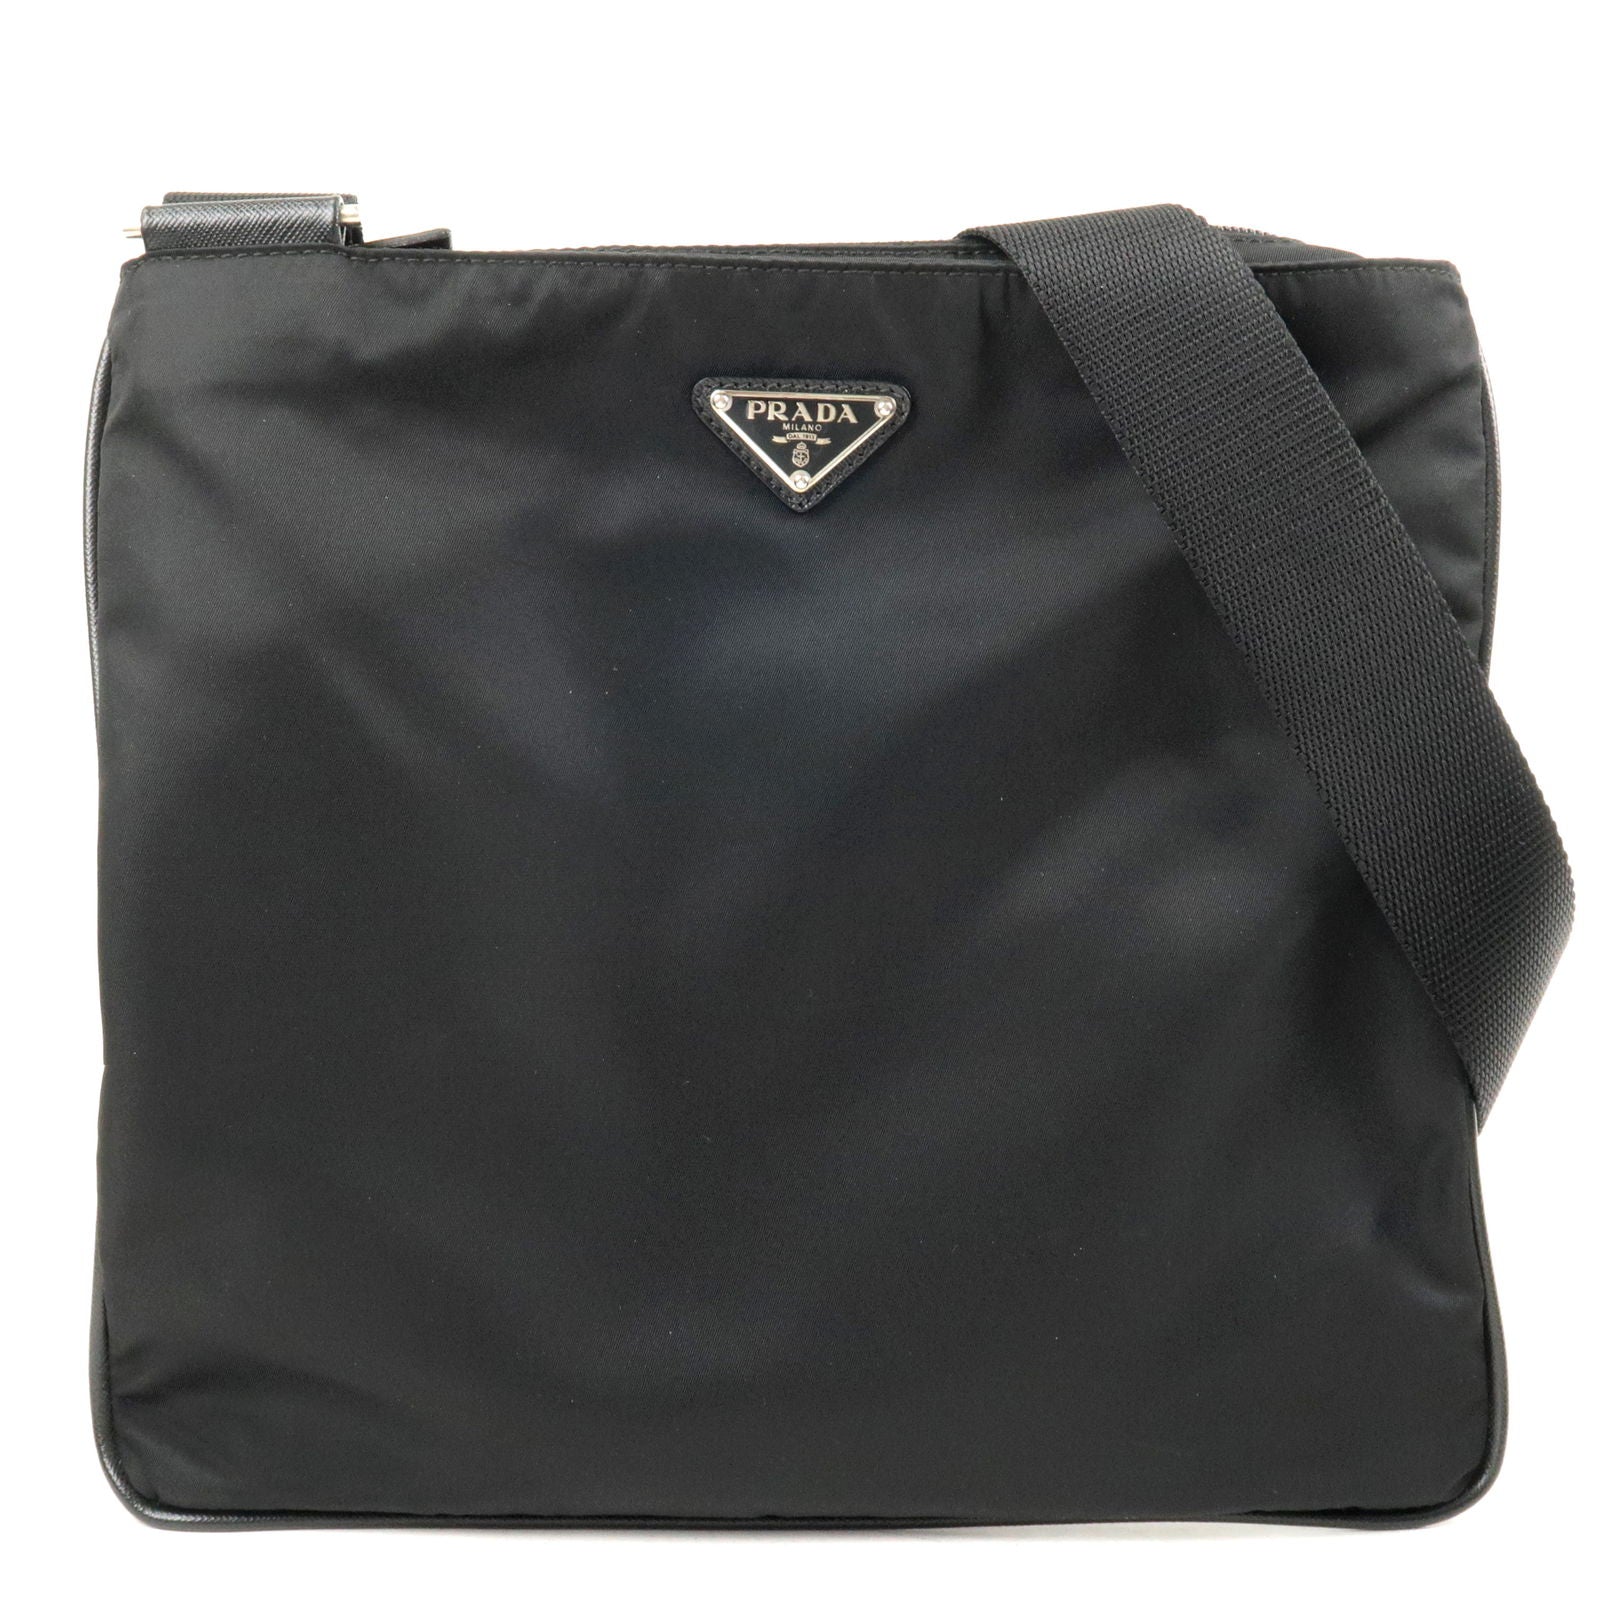 PRADA-Logo-Nylon-Leather-Shoulder-Bag-NERO-Black-VA0053